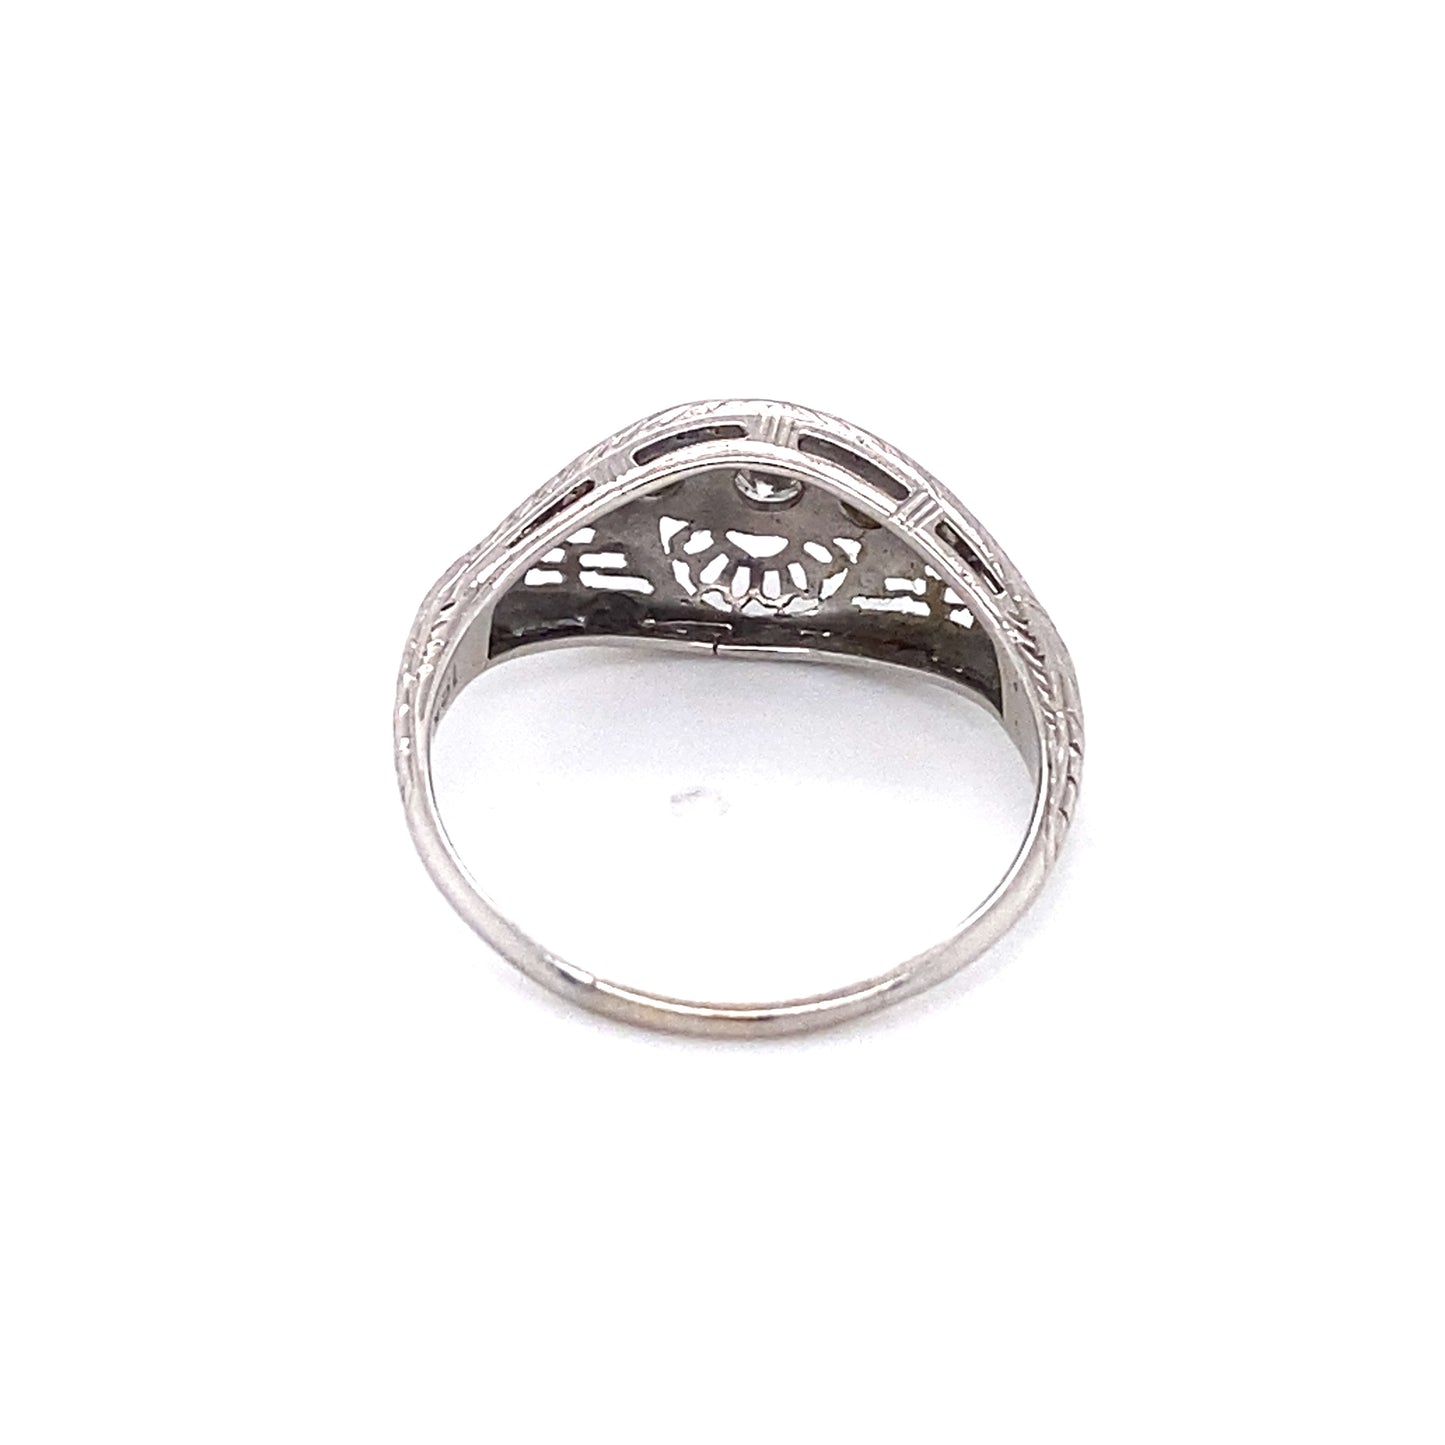 Circa 1920s Art Deco Three Stone Diamond Filigree Ring in 18 Karat White Gold